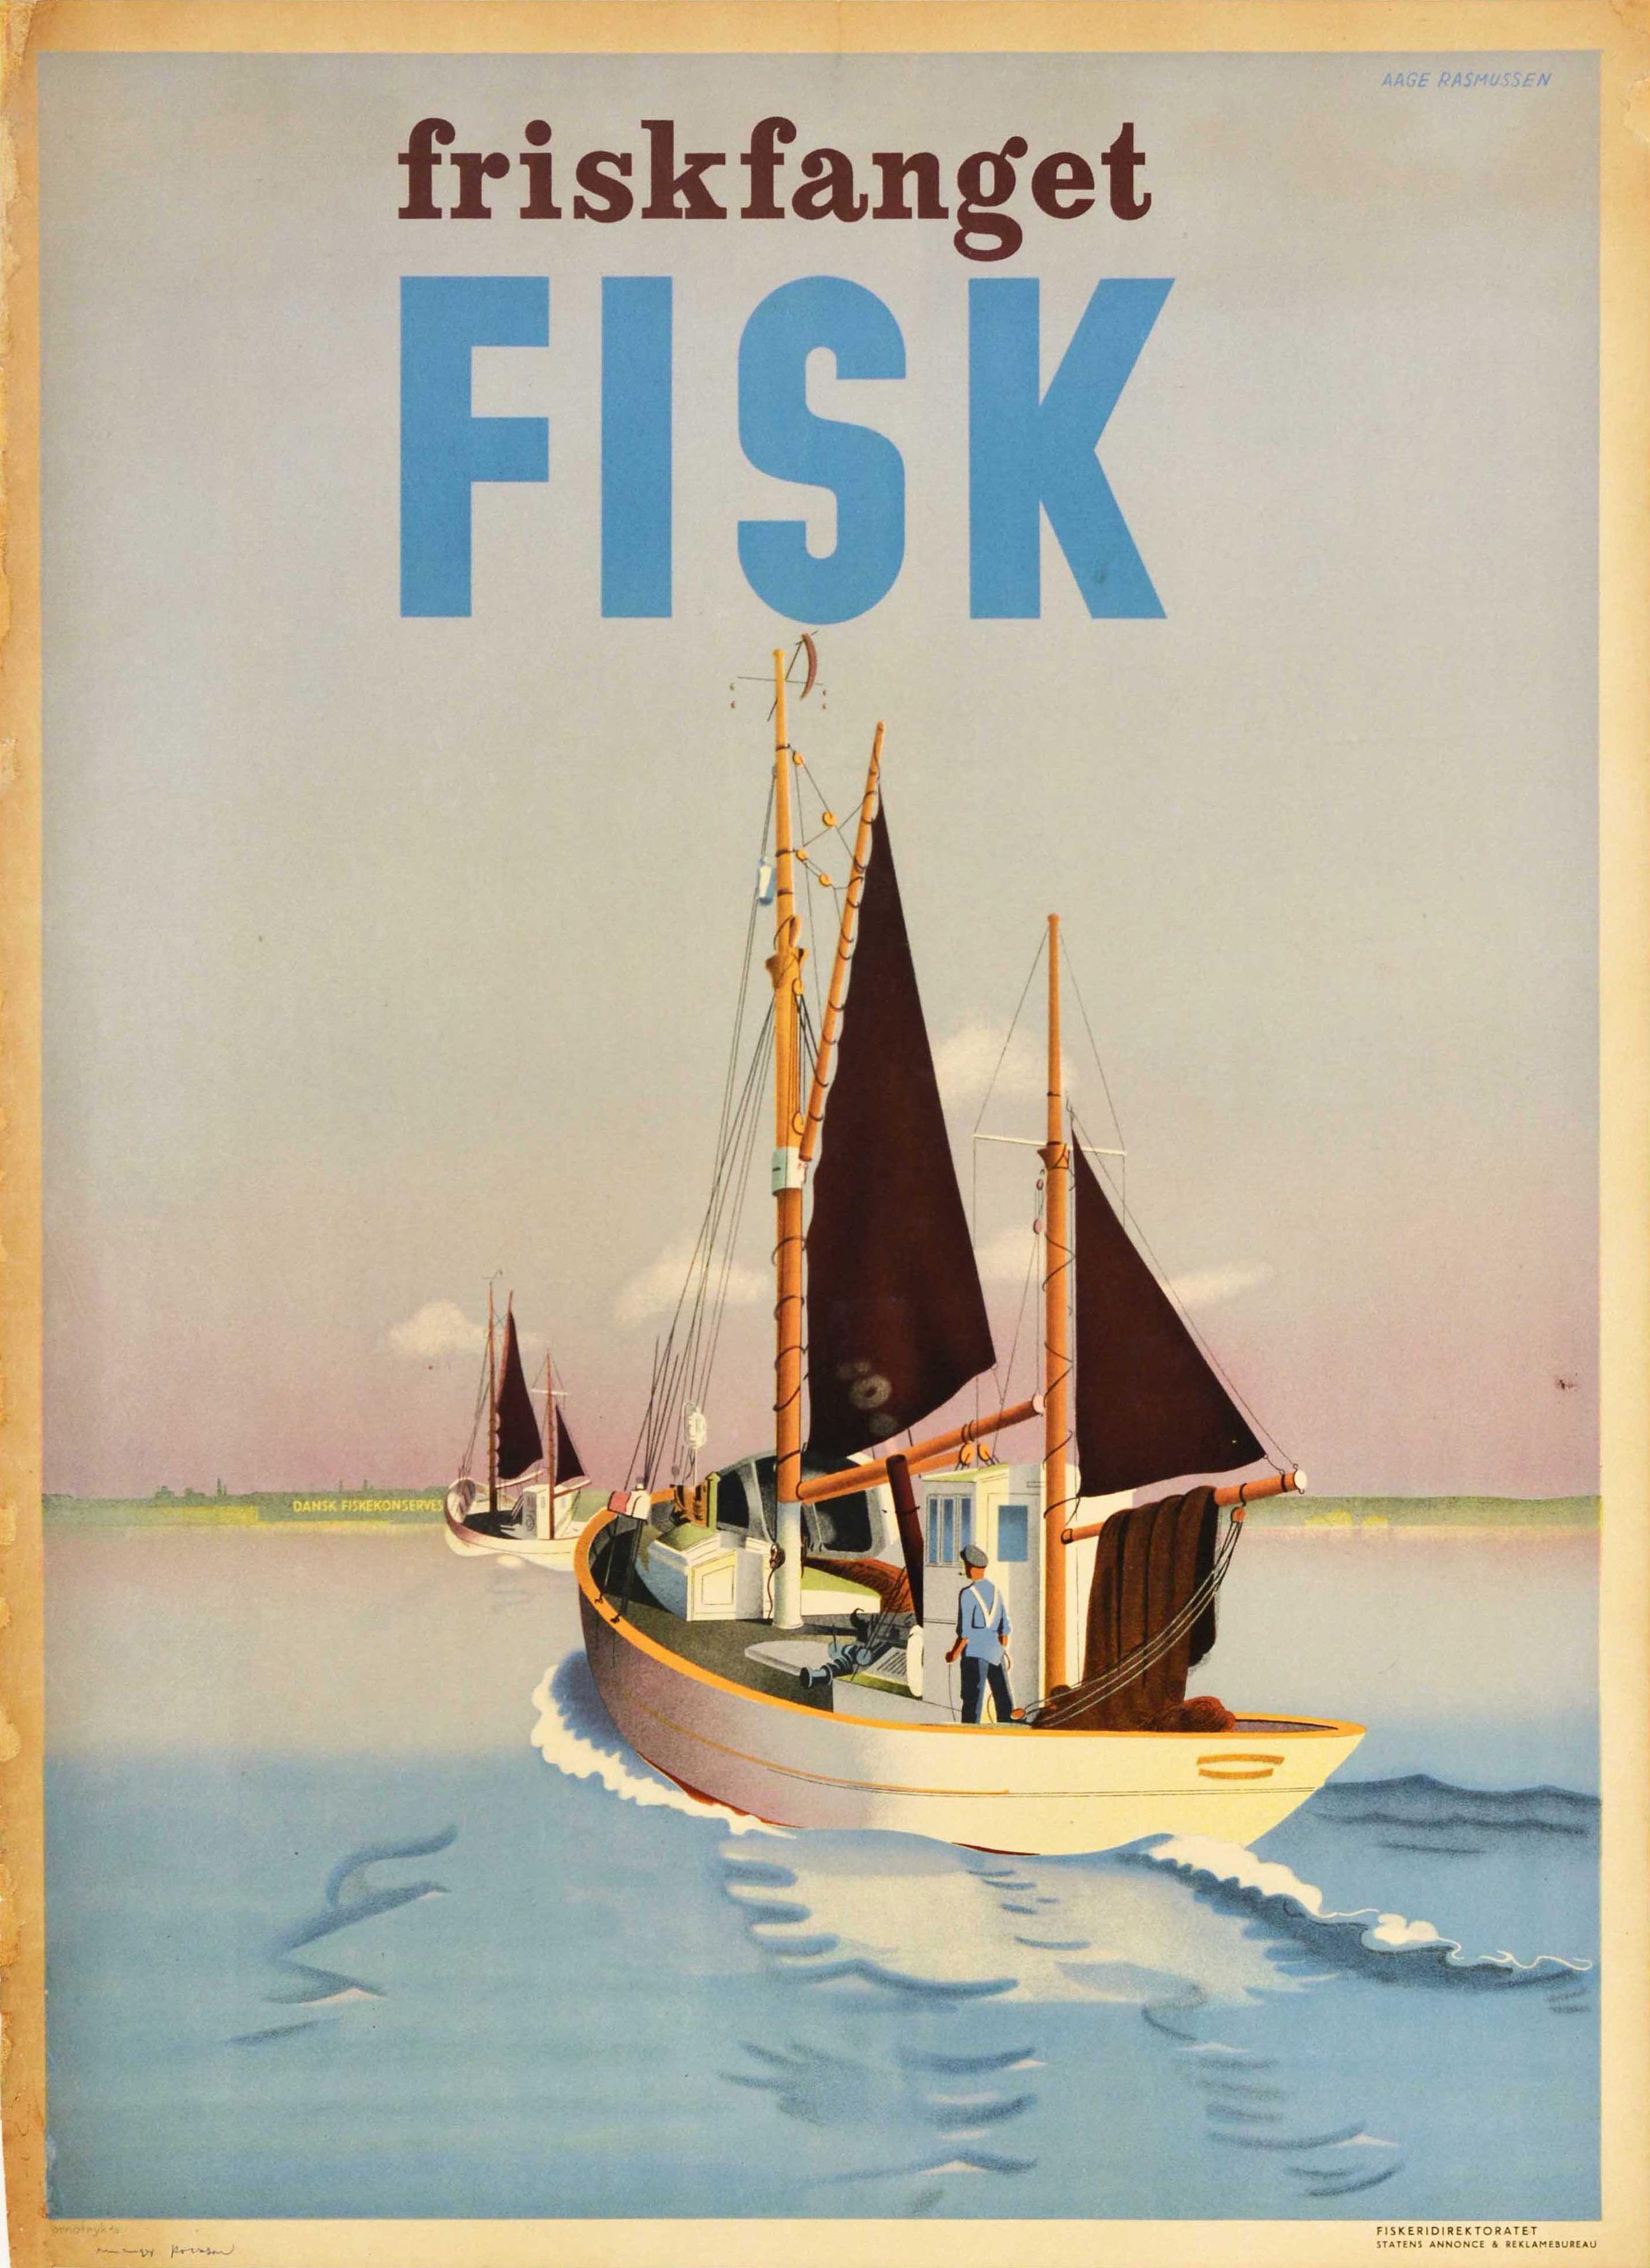 Aage Rasmussen Print - Original Vintage Advertising Poster Friskfanget Fisk Fresh Fish Denmark Boat Art